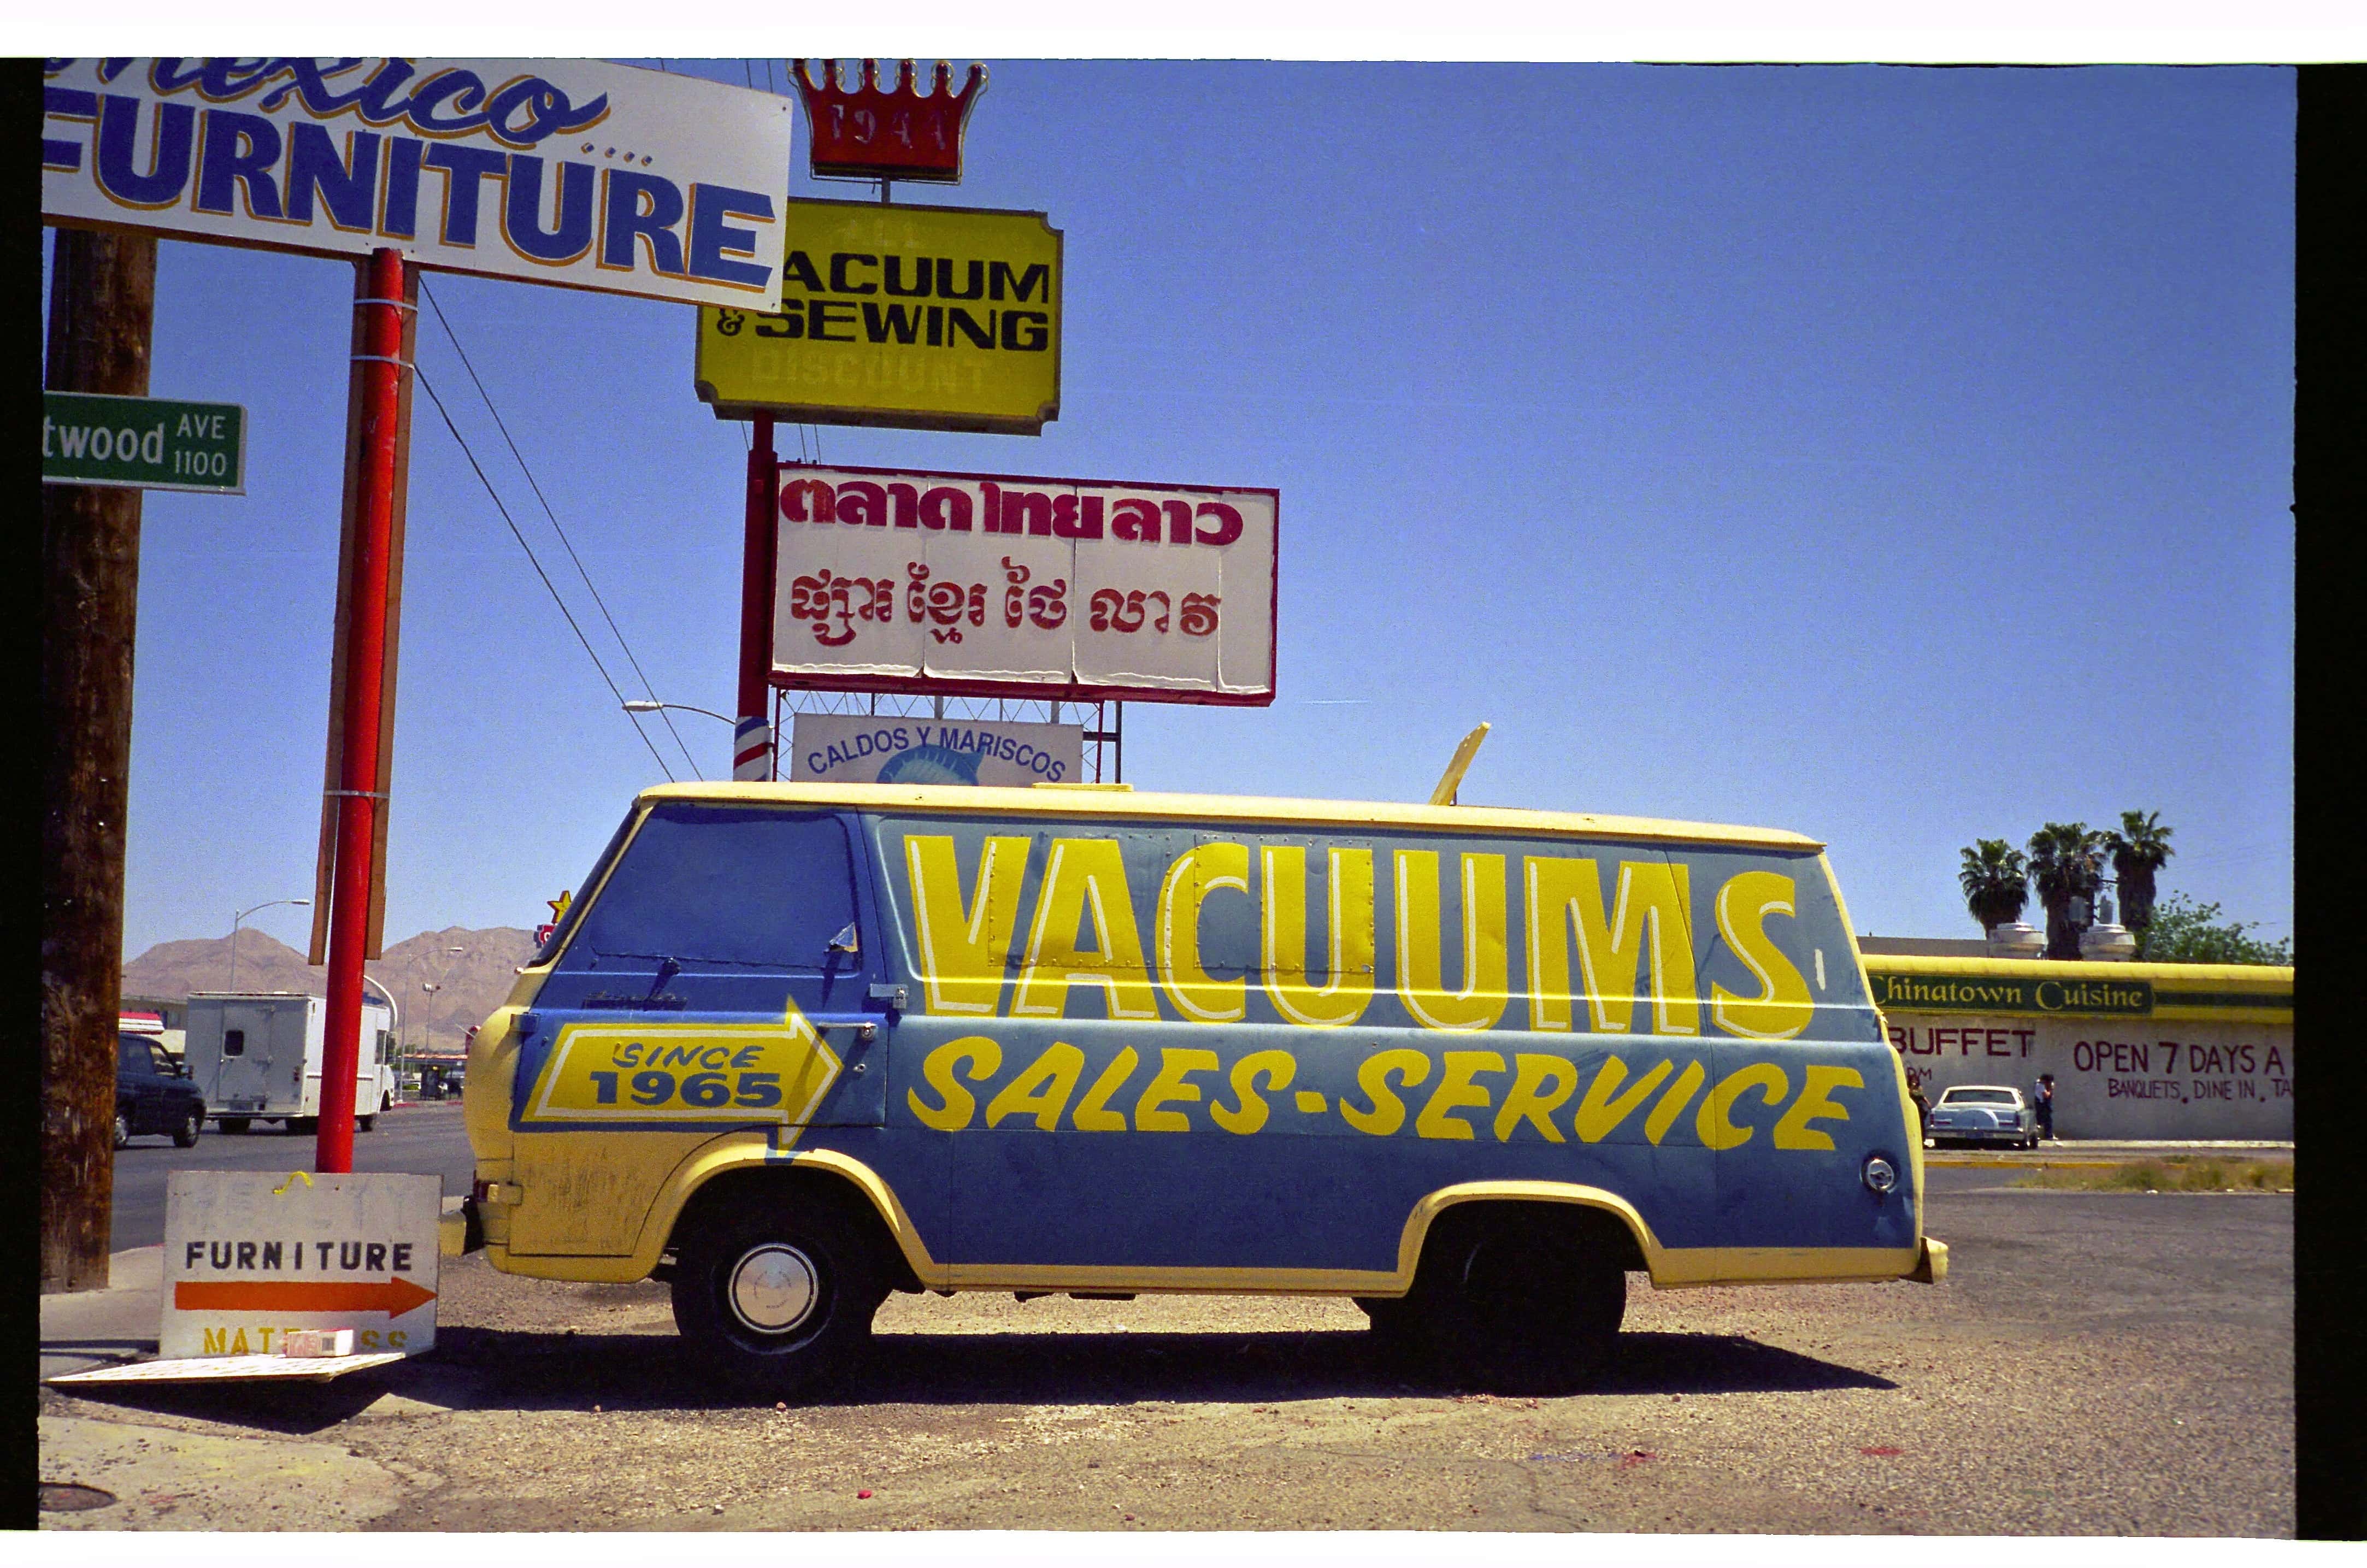 vacuums sales-service. Source.